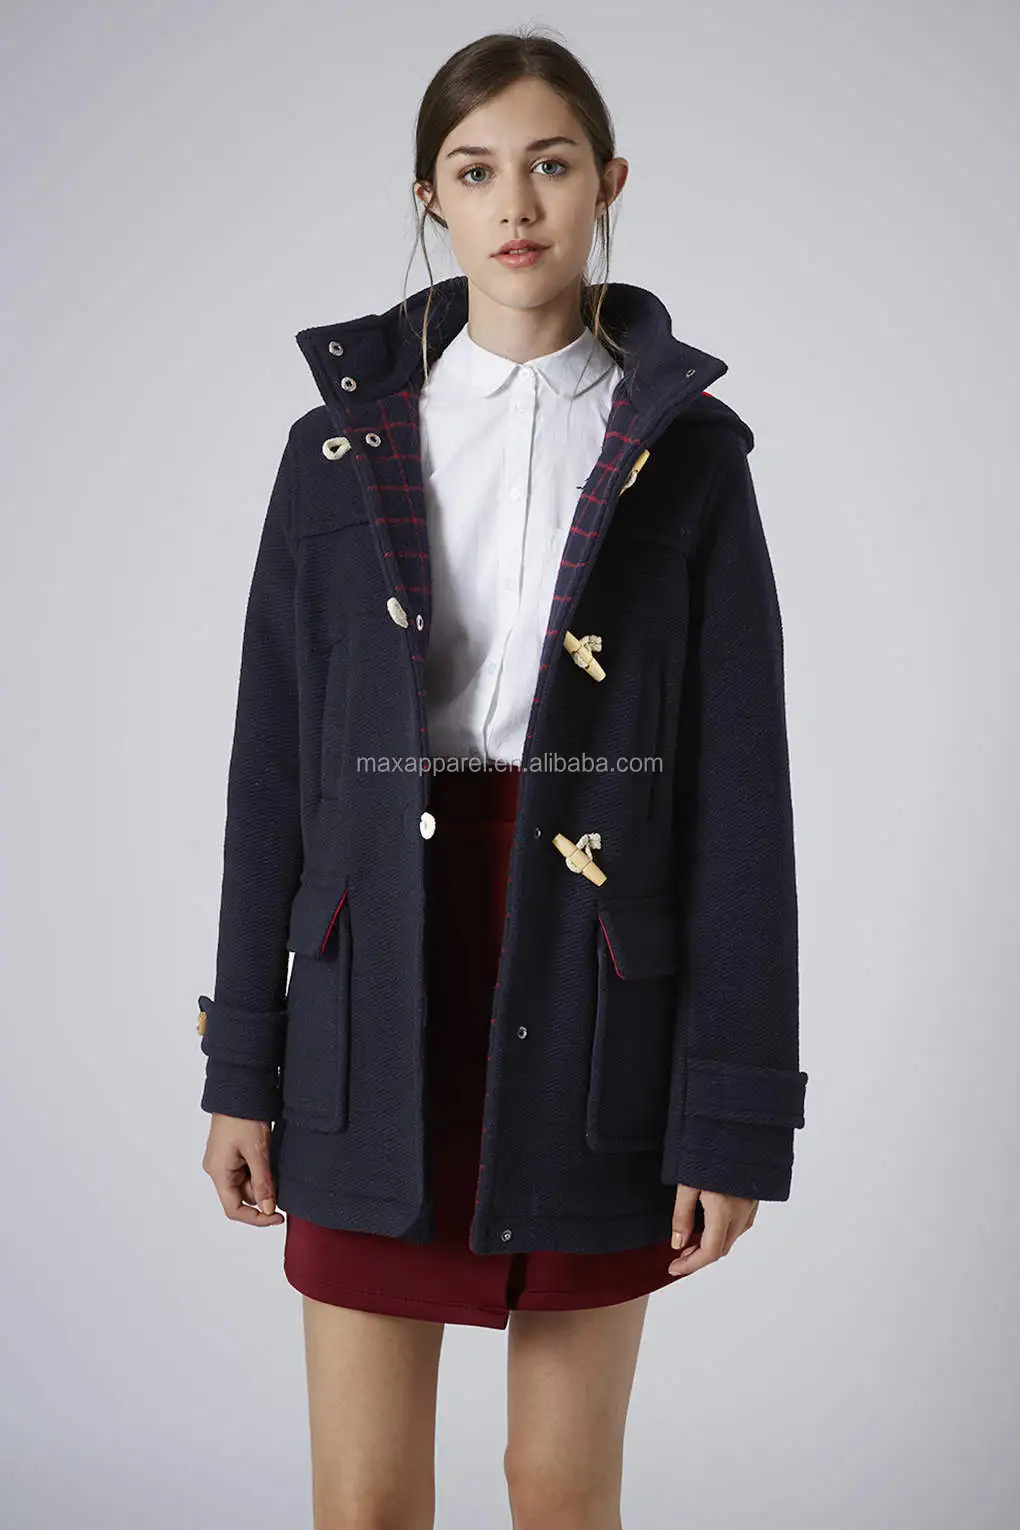 Womens Winter Duffle Coats - JacketIn